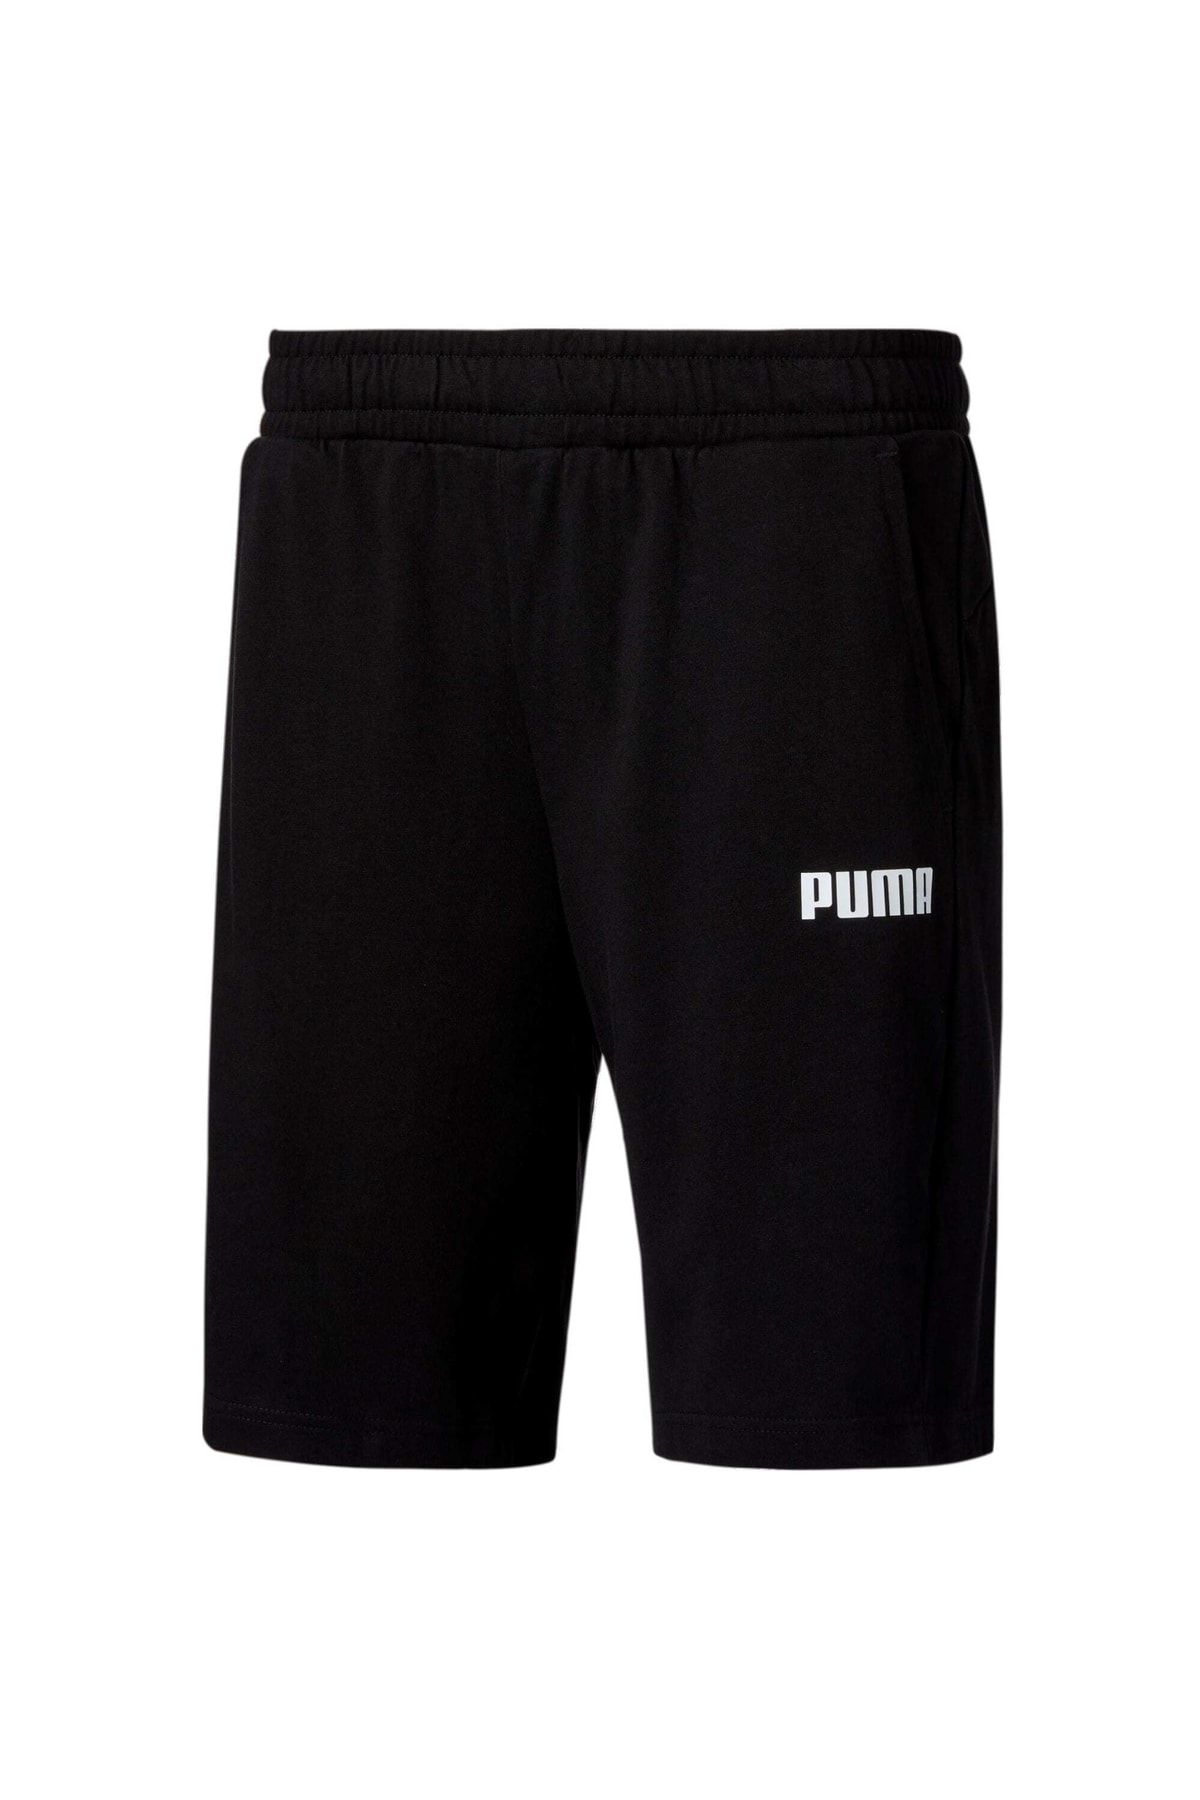 Puma Essentials Jersey Erkek Şort